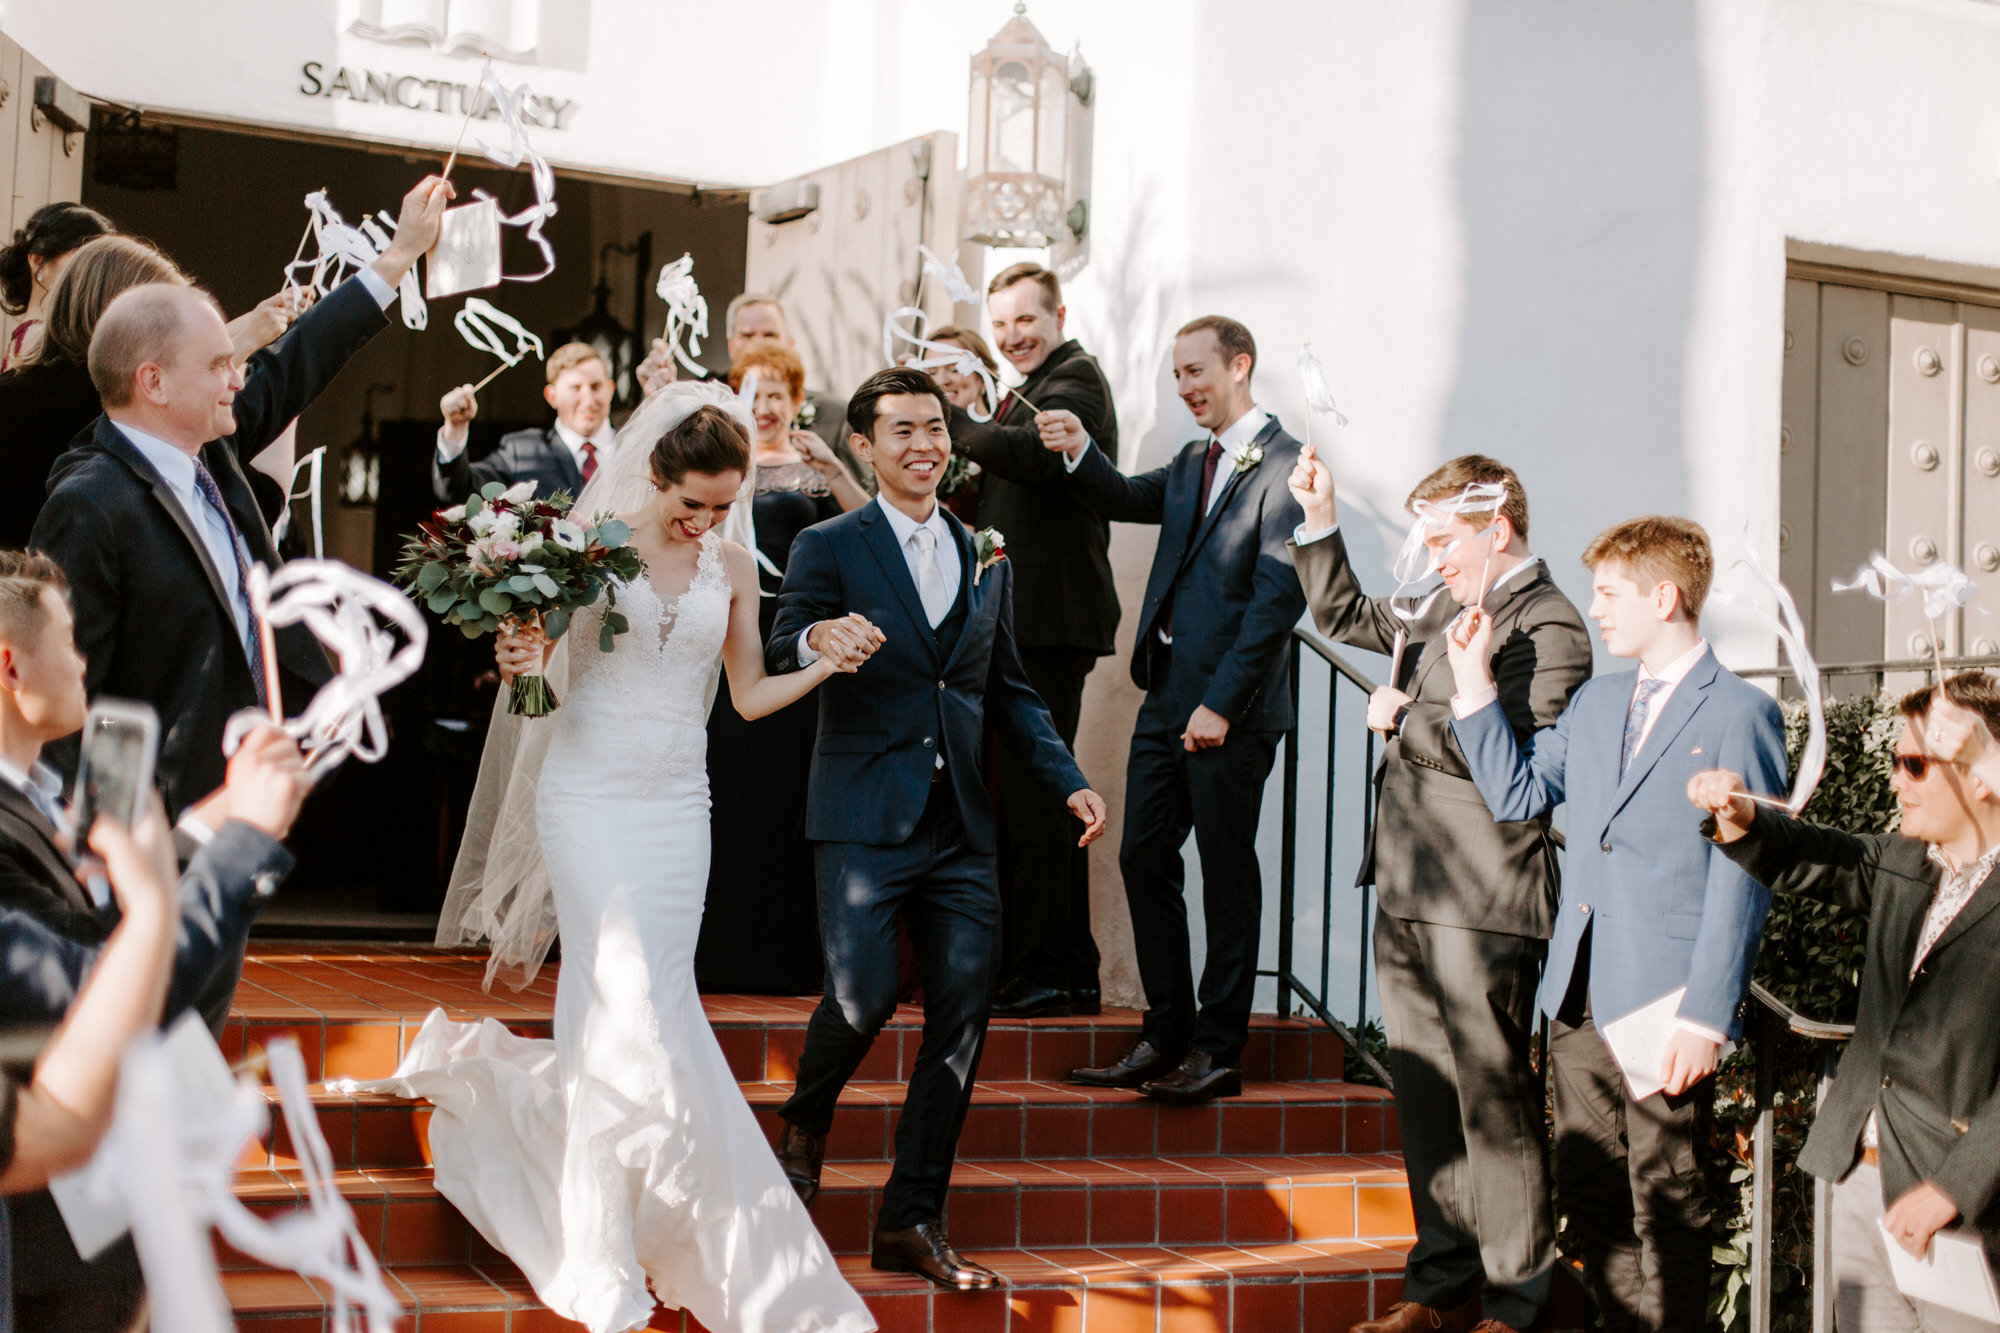 San Diego Wedding Photographer, San Diego Wedding photography, San Diego Wedding Venue, La Jolla Wedding Photographer, Cuvier Club Wedding, La Jolla Presbyterian Church Wedding, La Jolla Wedding Venue